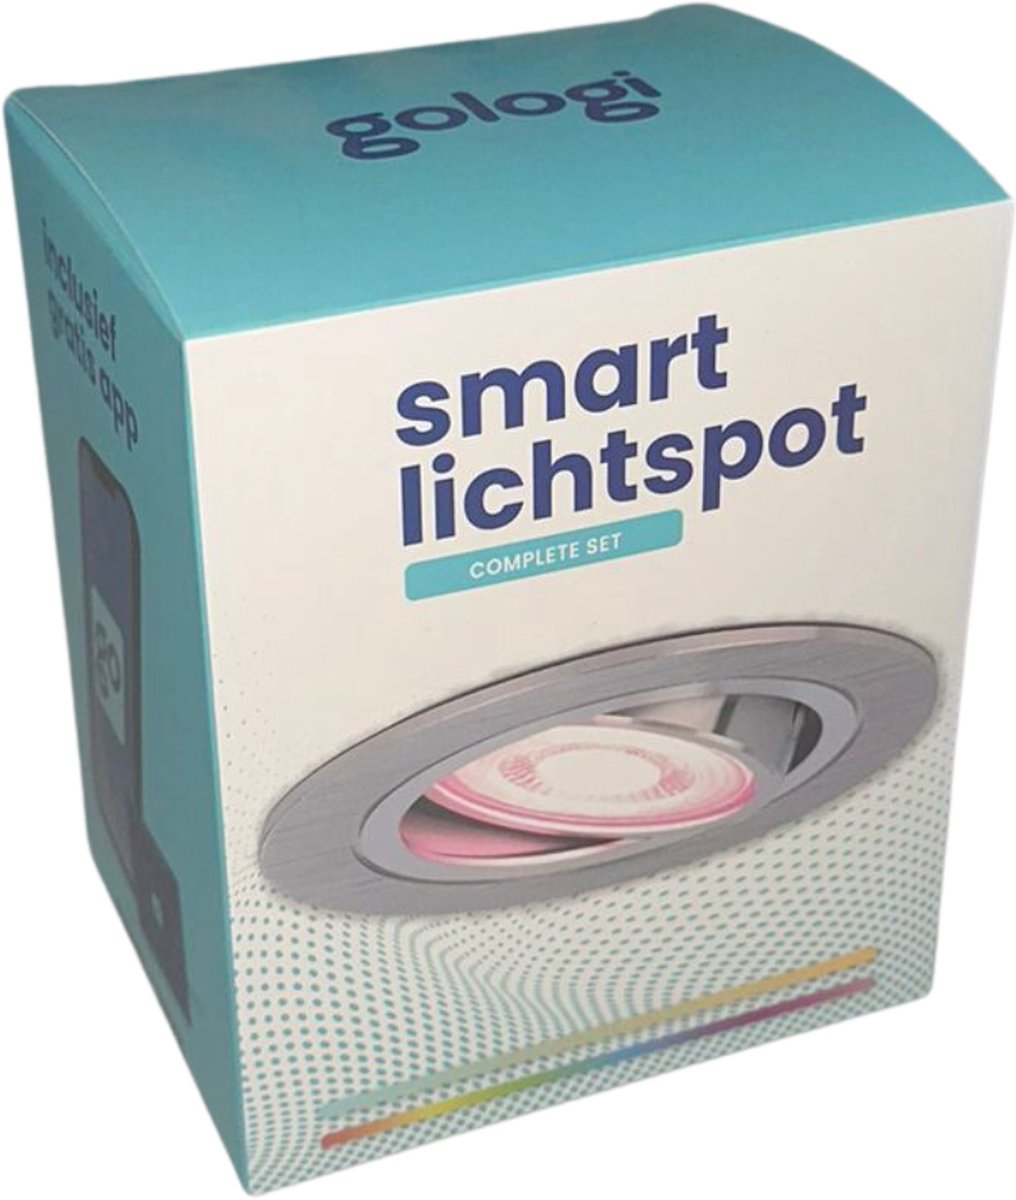 Gologi Slimme Inbouwspots - Smart LED Downlight Dimbaar - Kantelbaar - Warm Wit Licht - Gu10 LED Lamp - Wit